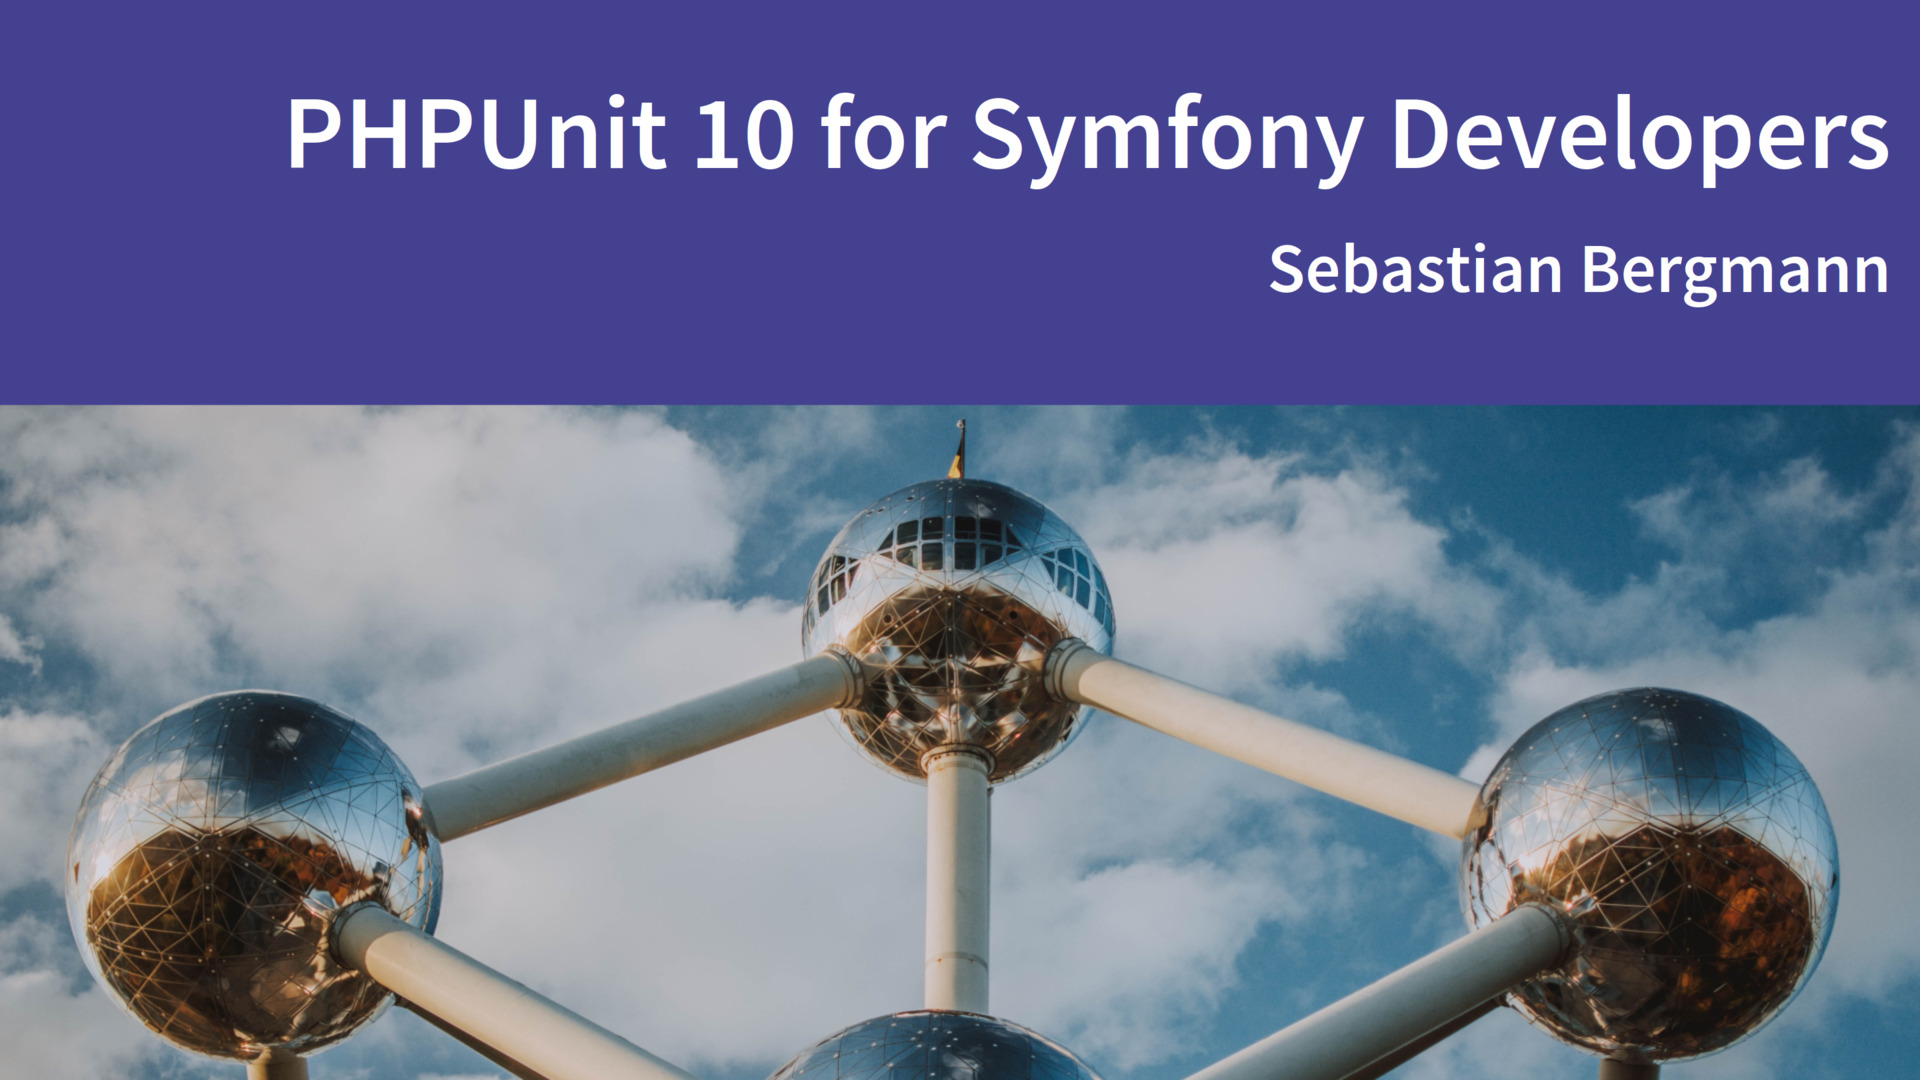 PHPUnit 10 for Symfony Developers